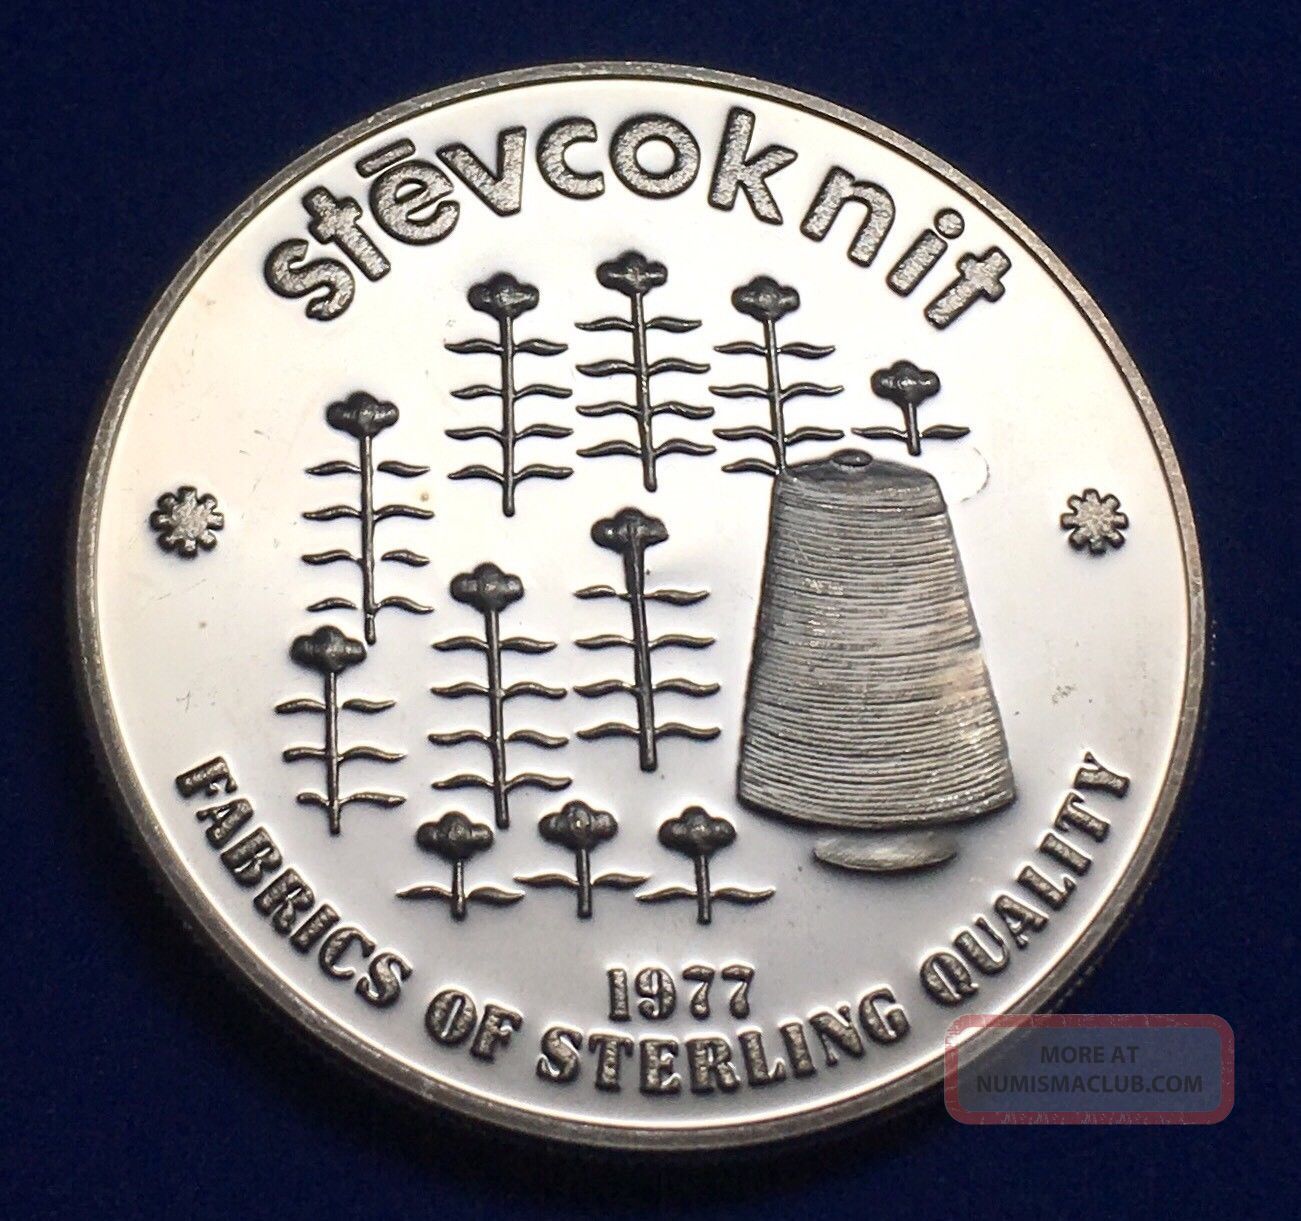 1977 Engelhard Stevcoknit 1 Oz.  999 Fine Silver Round - Rare Bars & Rounds photo